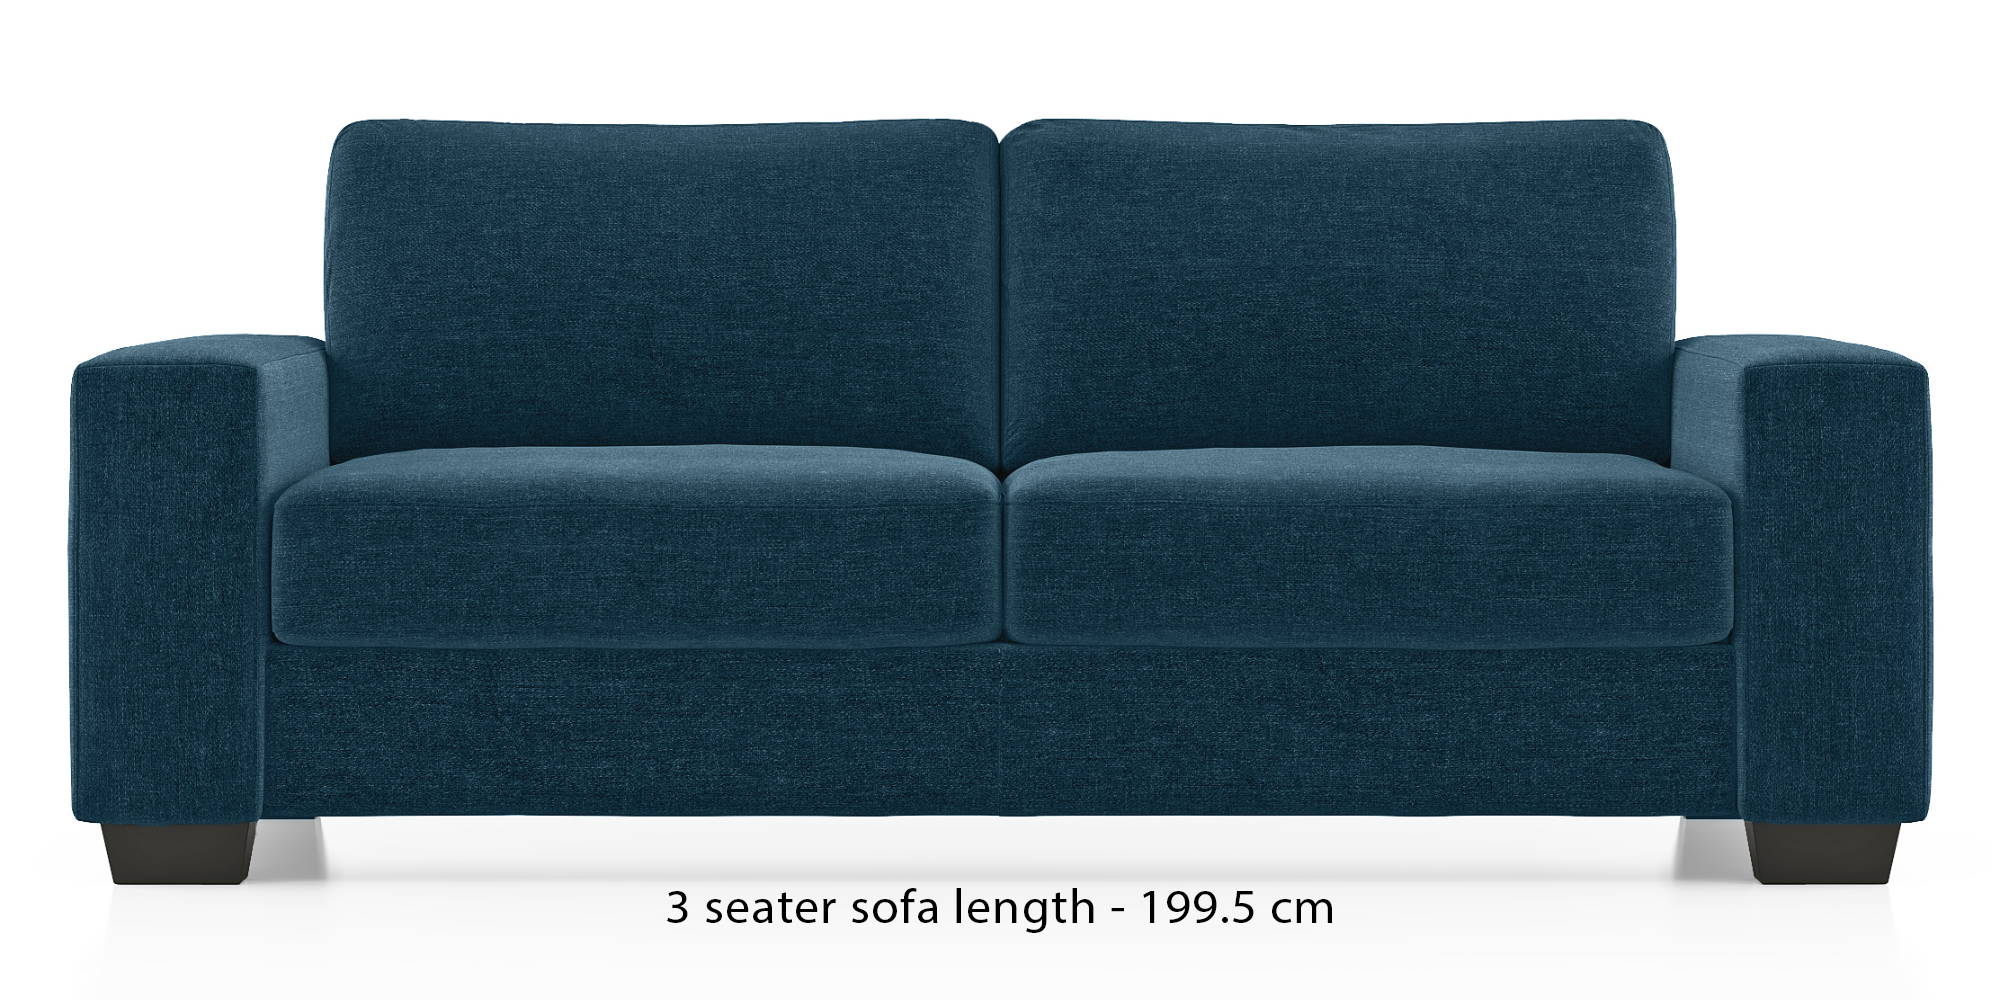 Leslie Sofa (Delft Blue) (3-seater Custom Set - Sofas, None Standard Set - Sofas, Fabric Sofa Material, Regular Sofa Size, Regular Sofa Type, Delft Blue) by Urban Ladder - - 